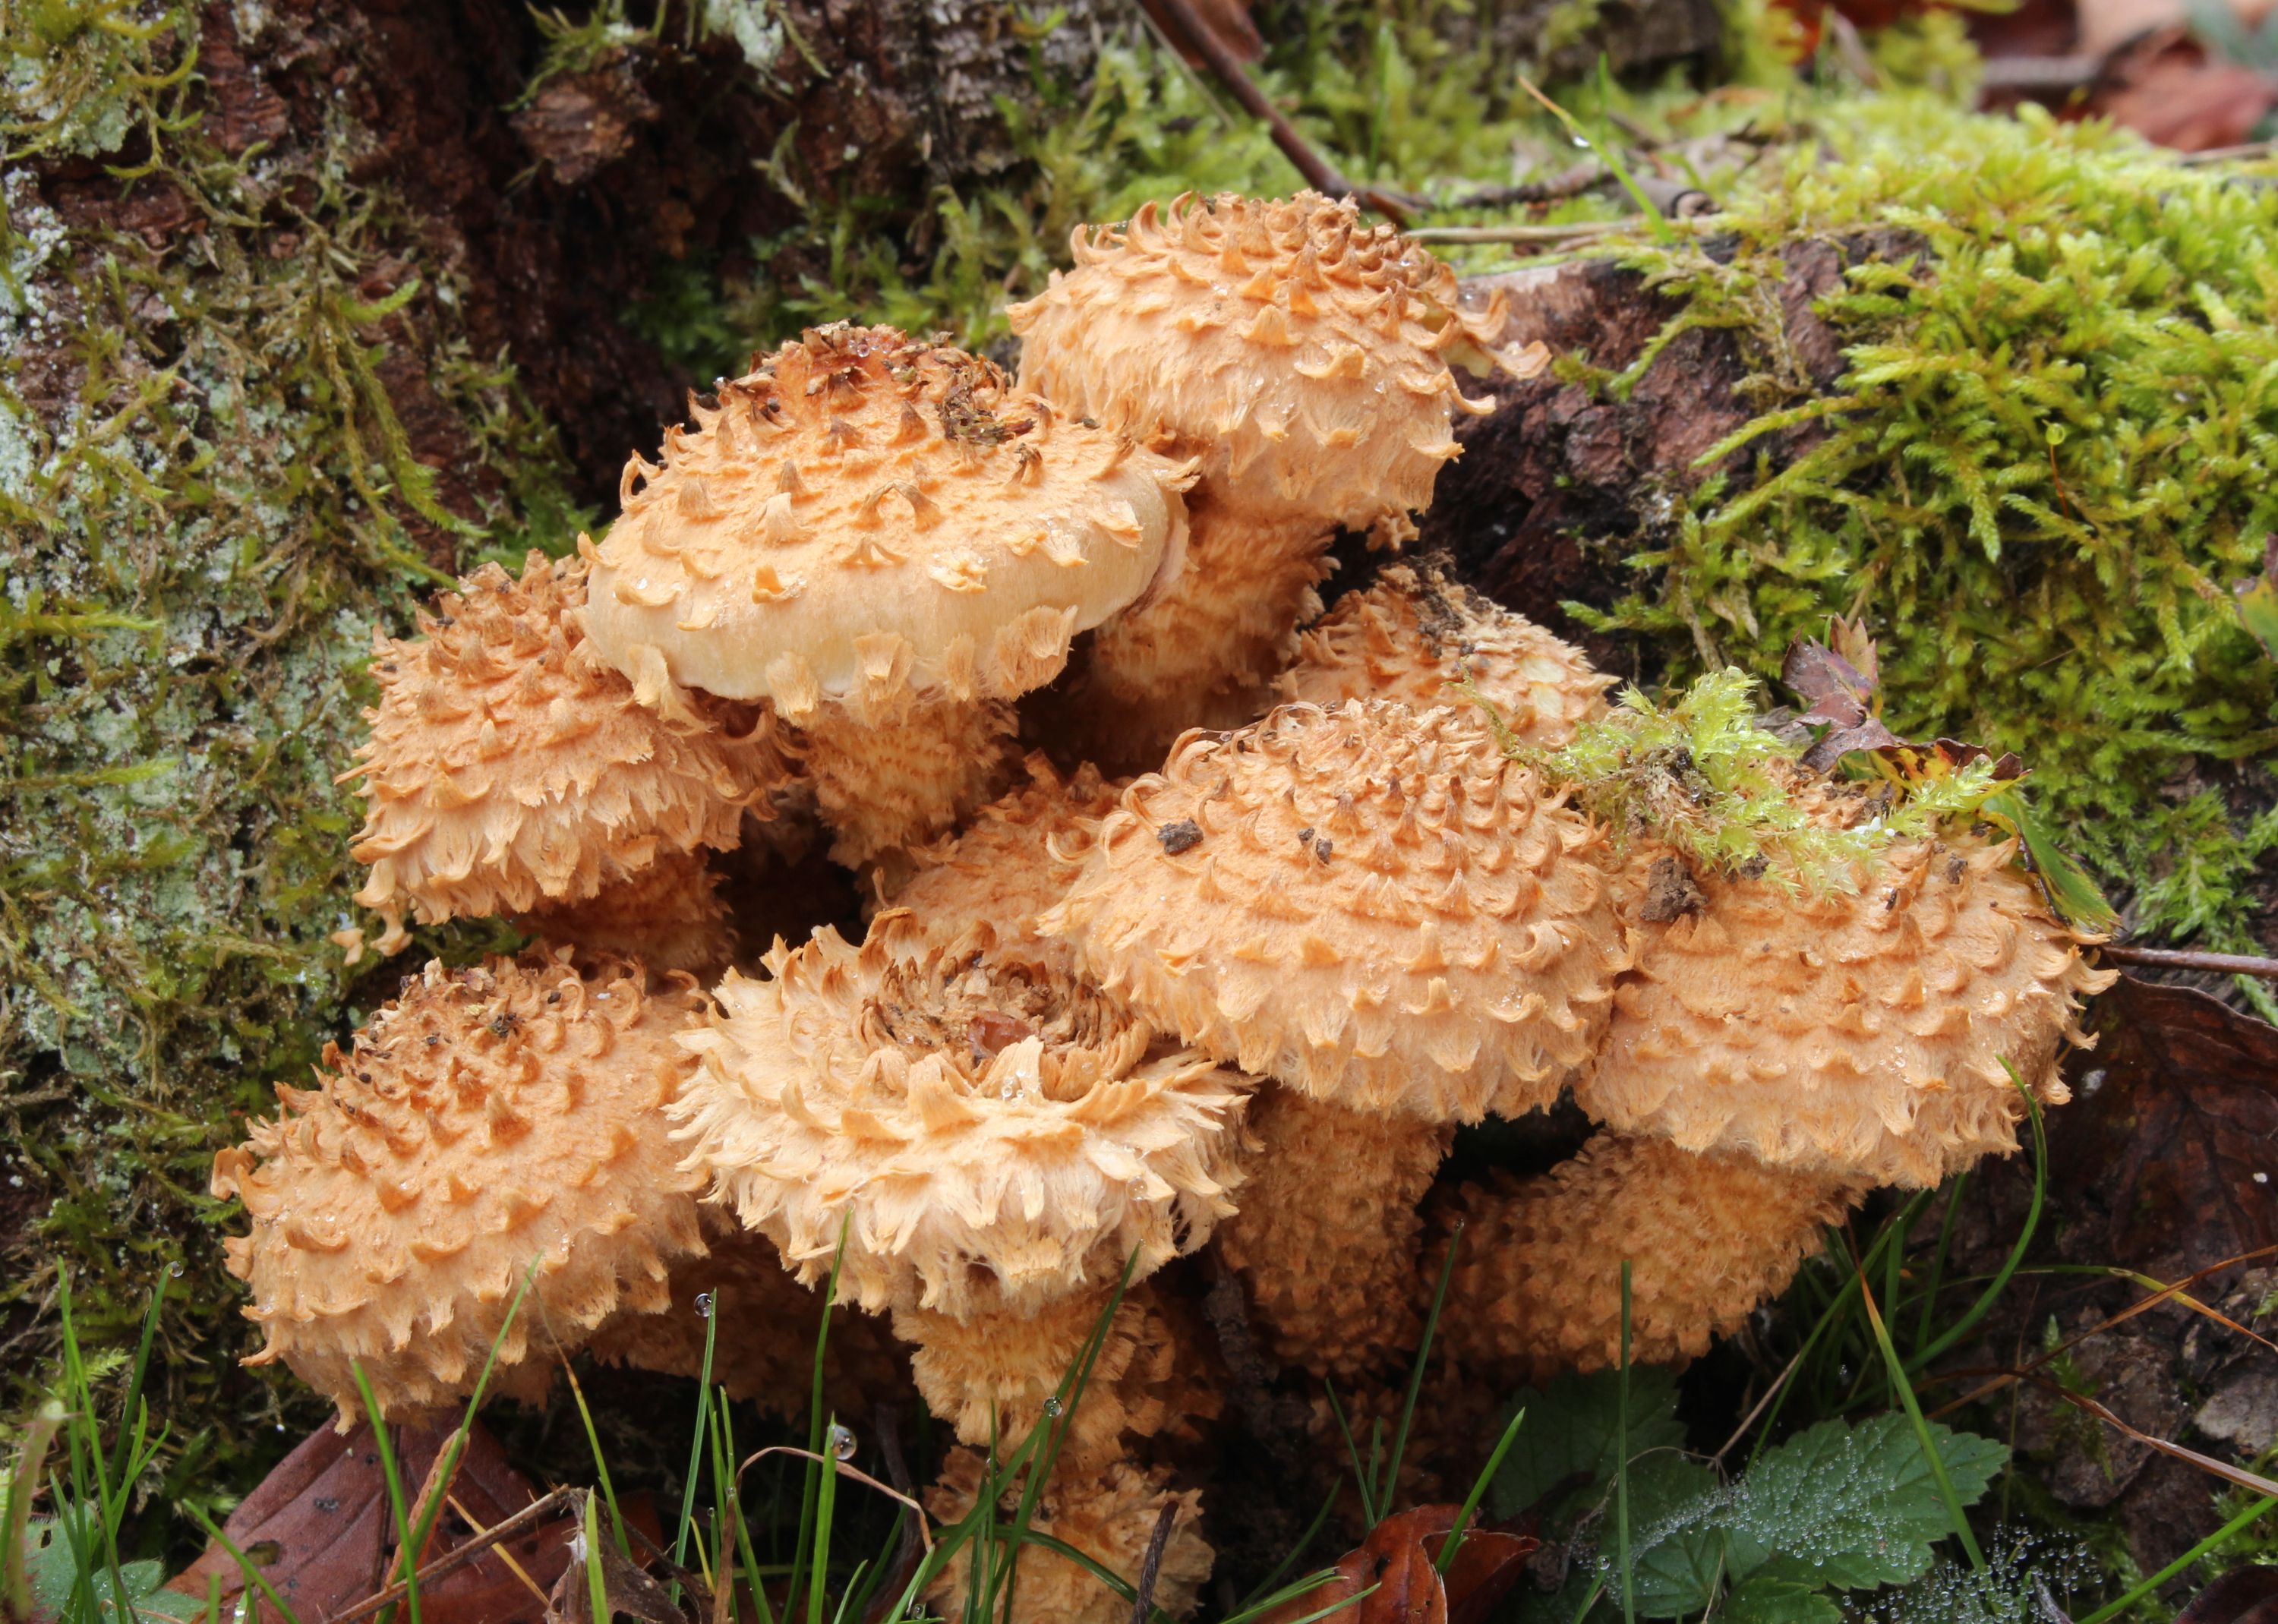 Shaggy pholiota mushrooms photo